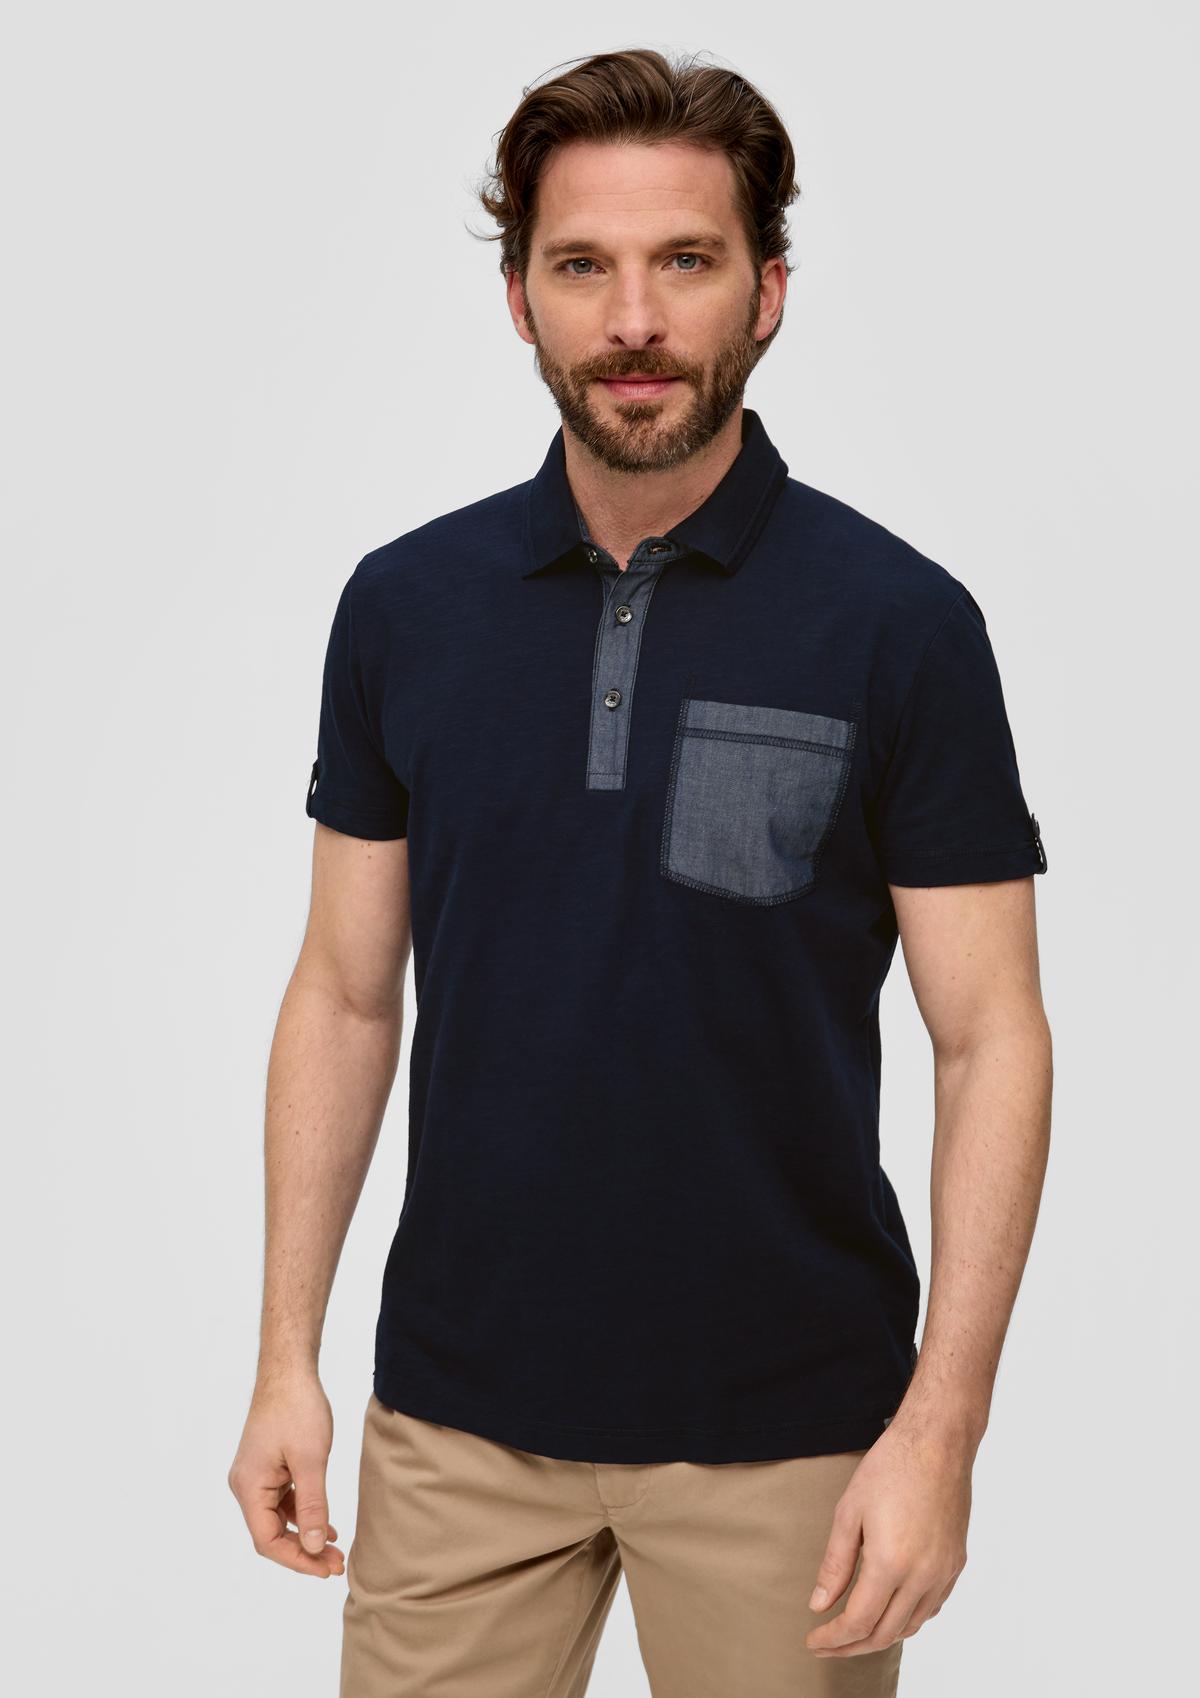 Polo shirt with a slub yarn texture